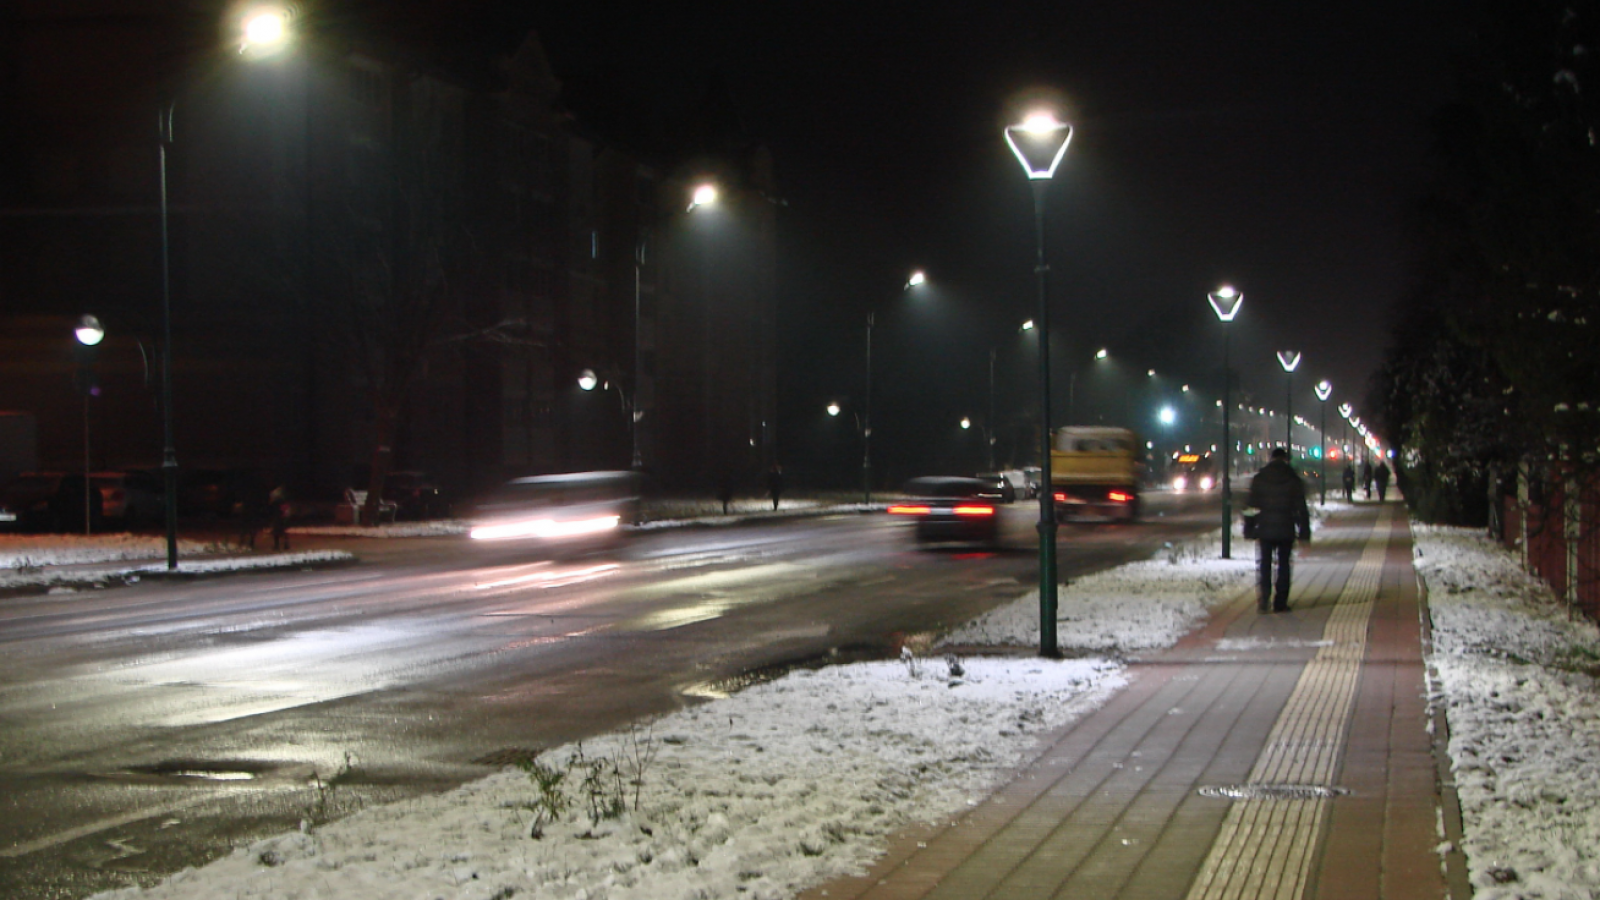  Covenant of Mayors East in Belarus: refurbished city lighting in Bereza